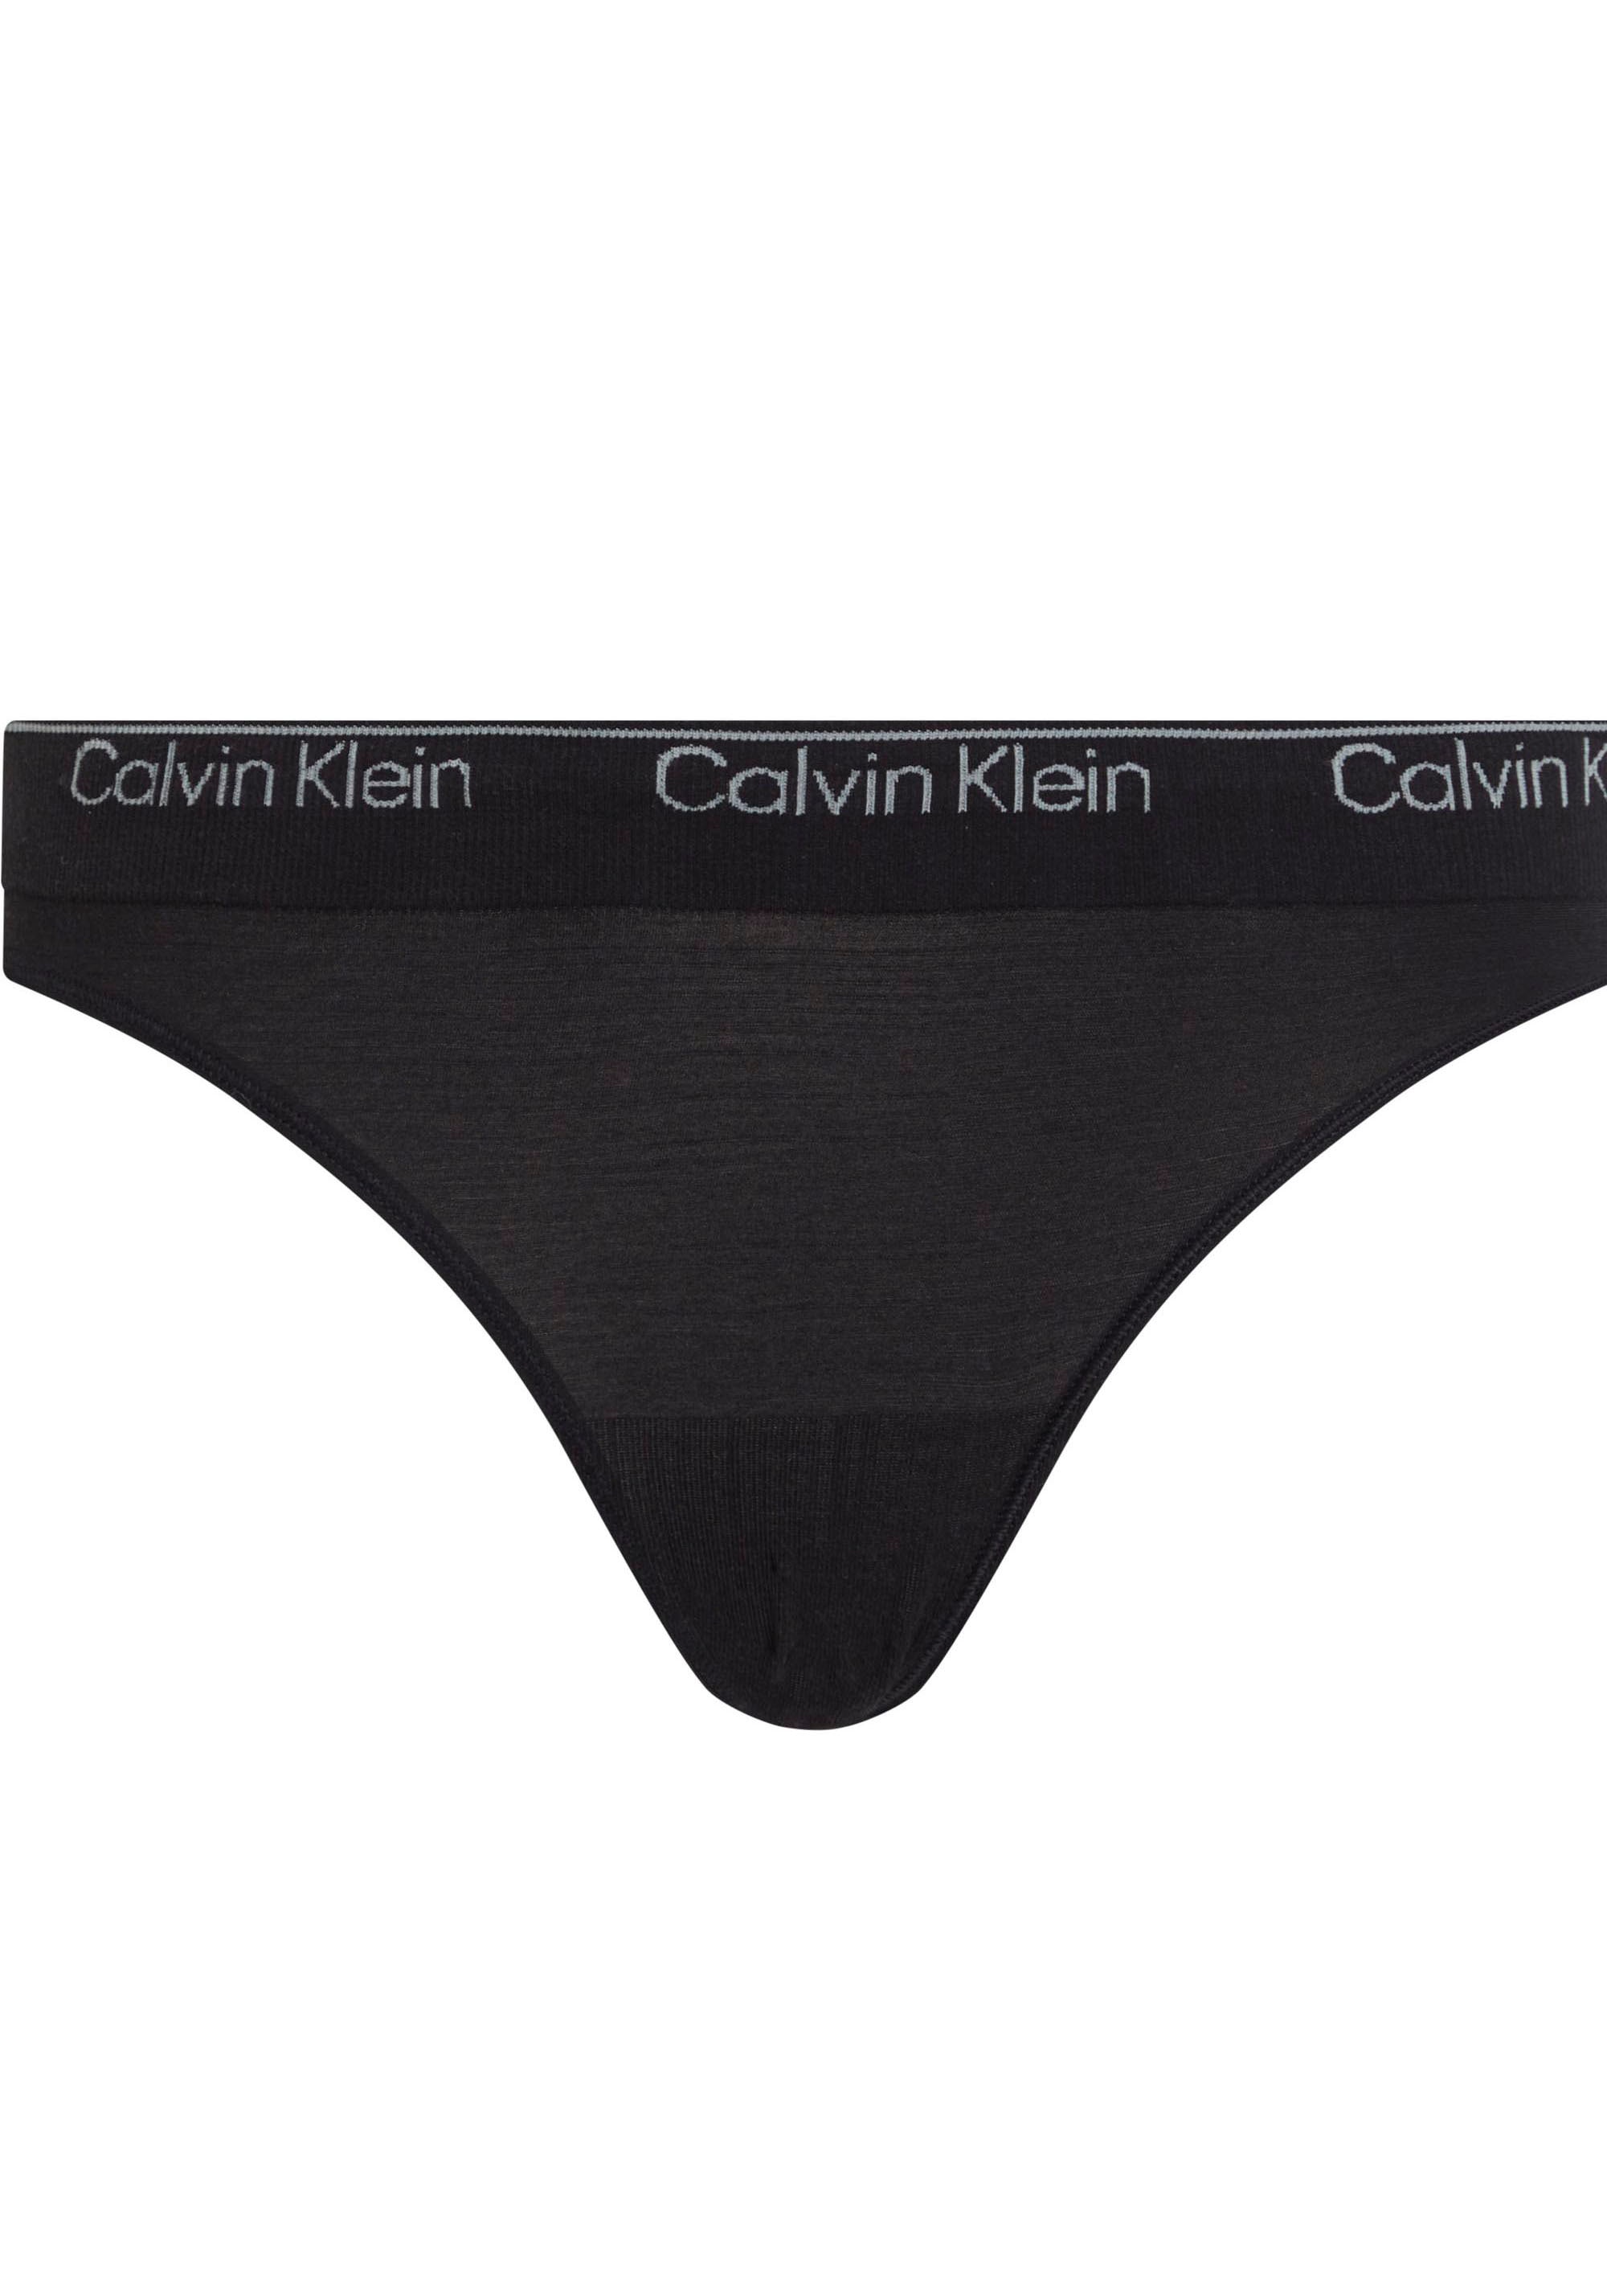 Bikinislip am Klein Calvin CK-Logo Bund ♕ mit bei »BIKINI«,